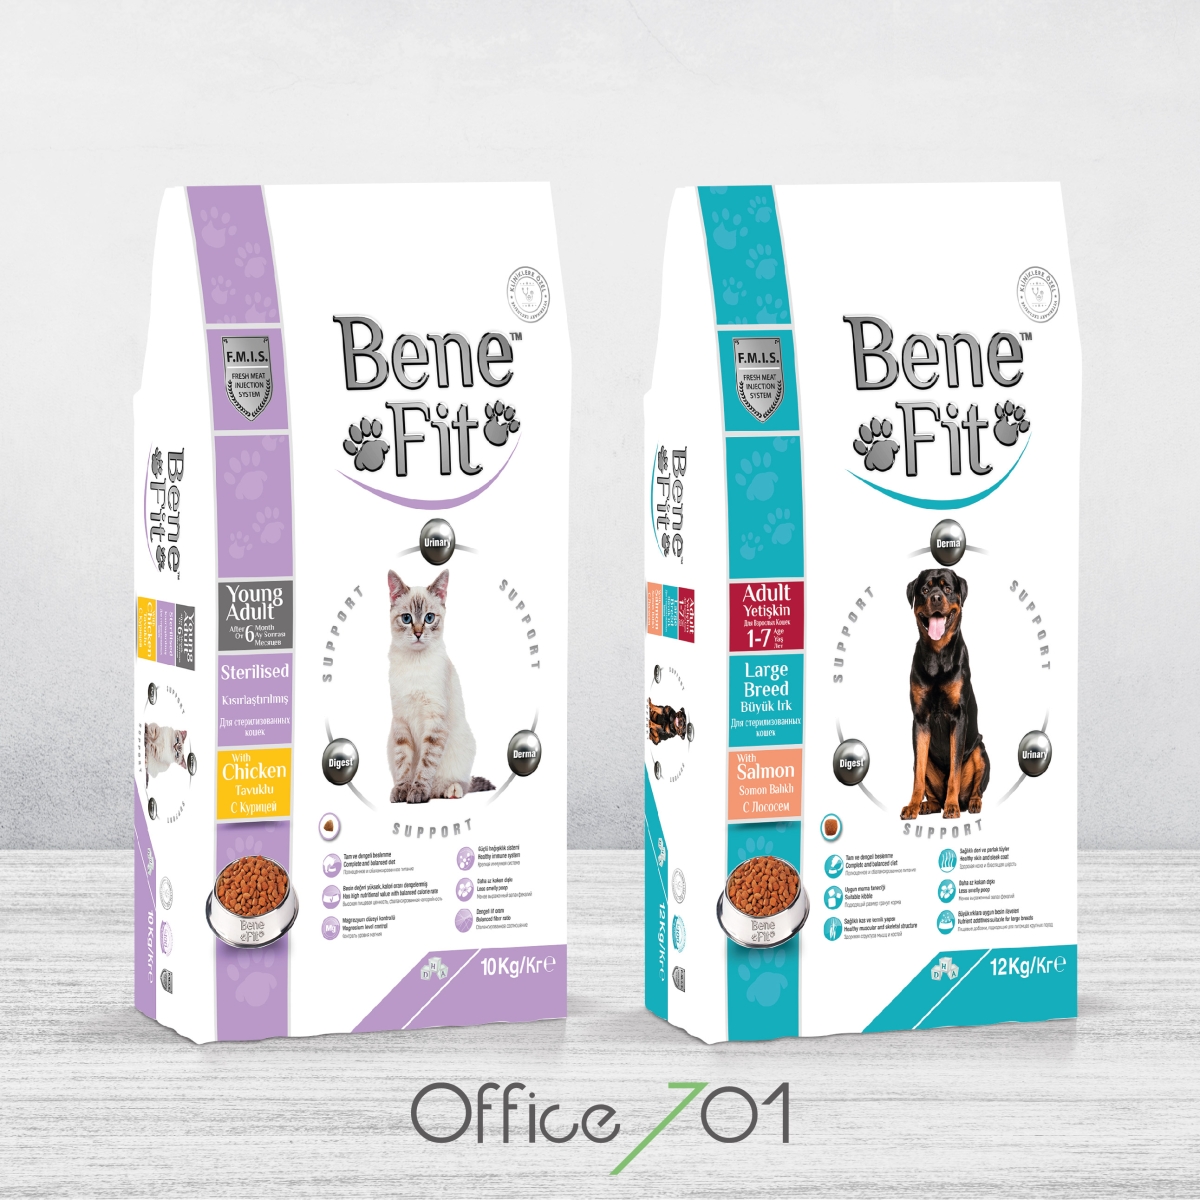 Office701 | Benefit Pet Food Packaging Design